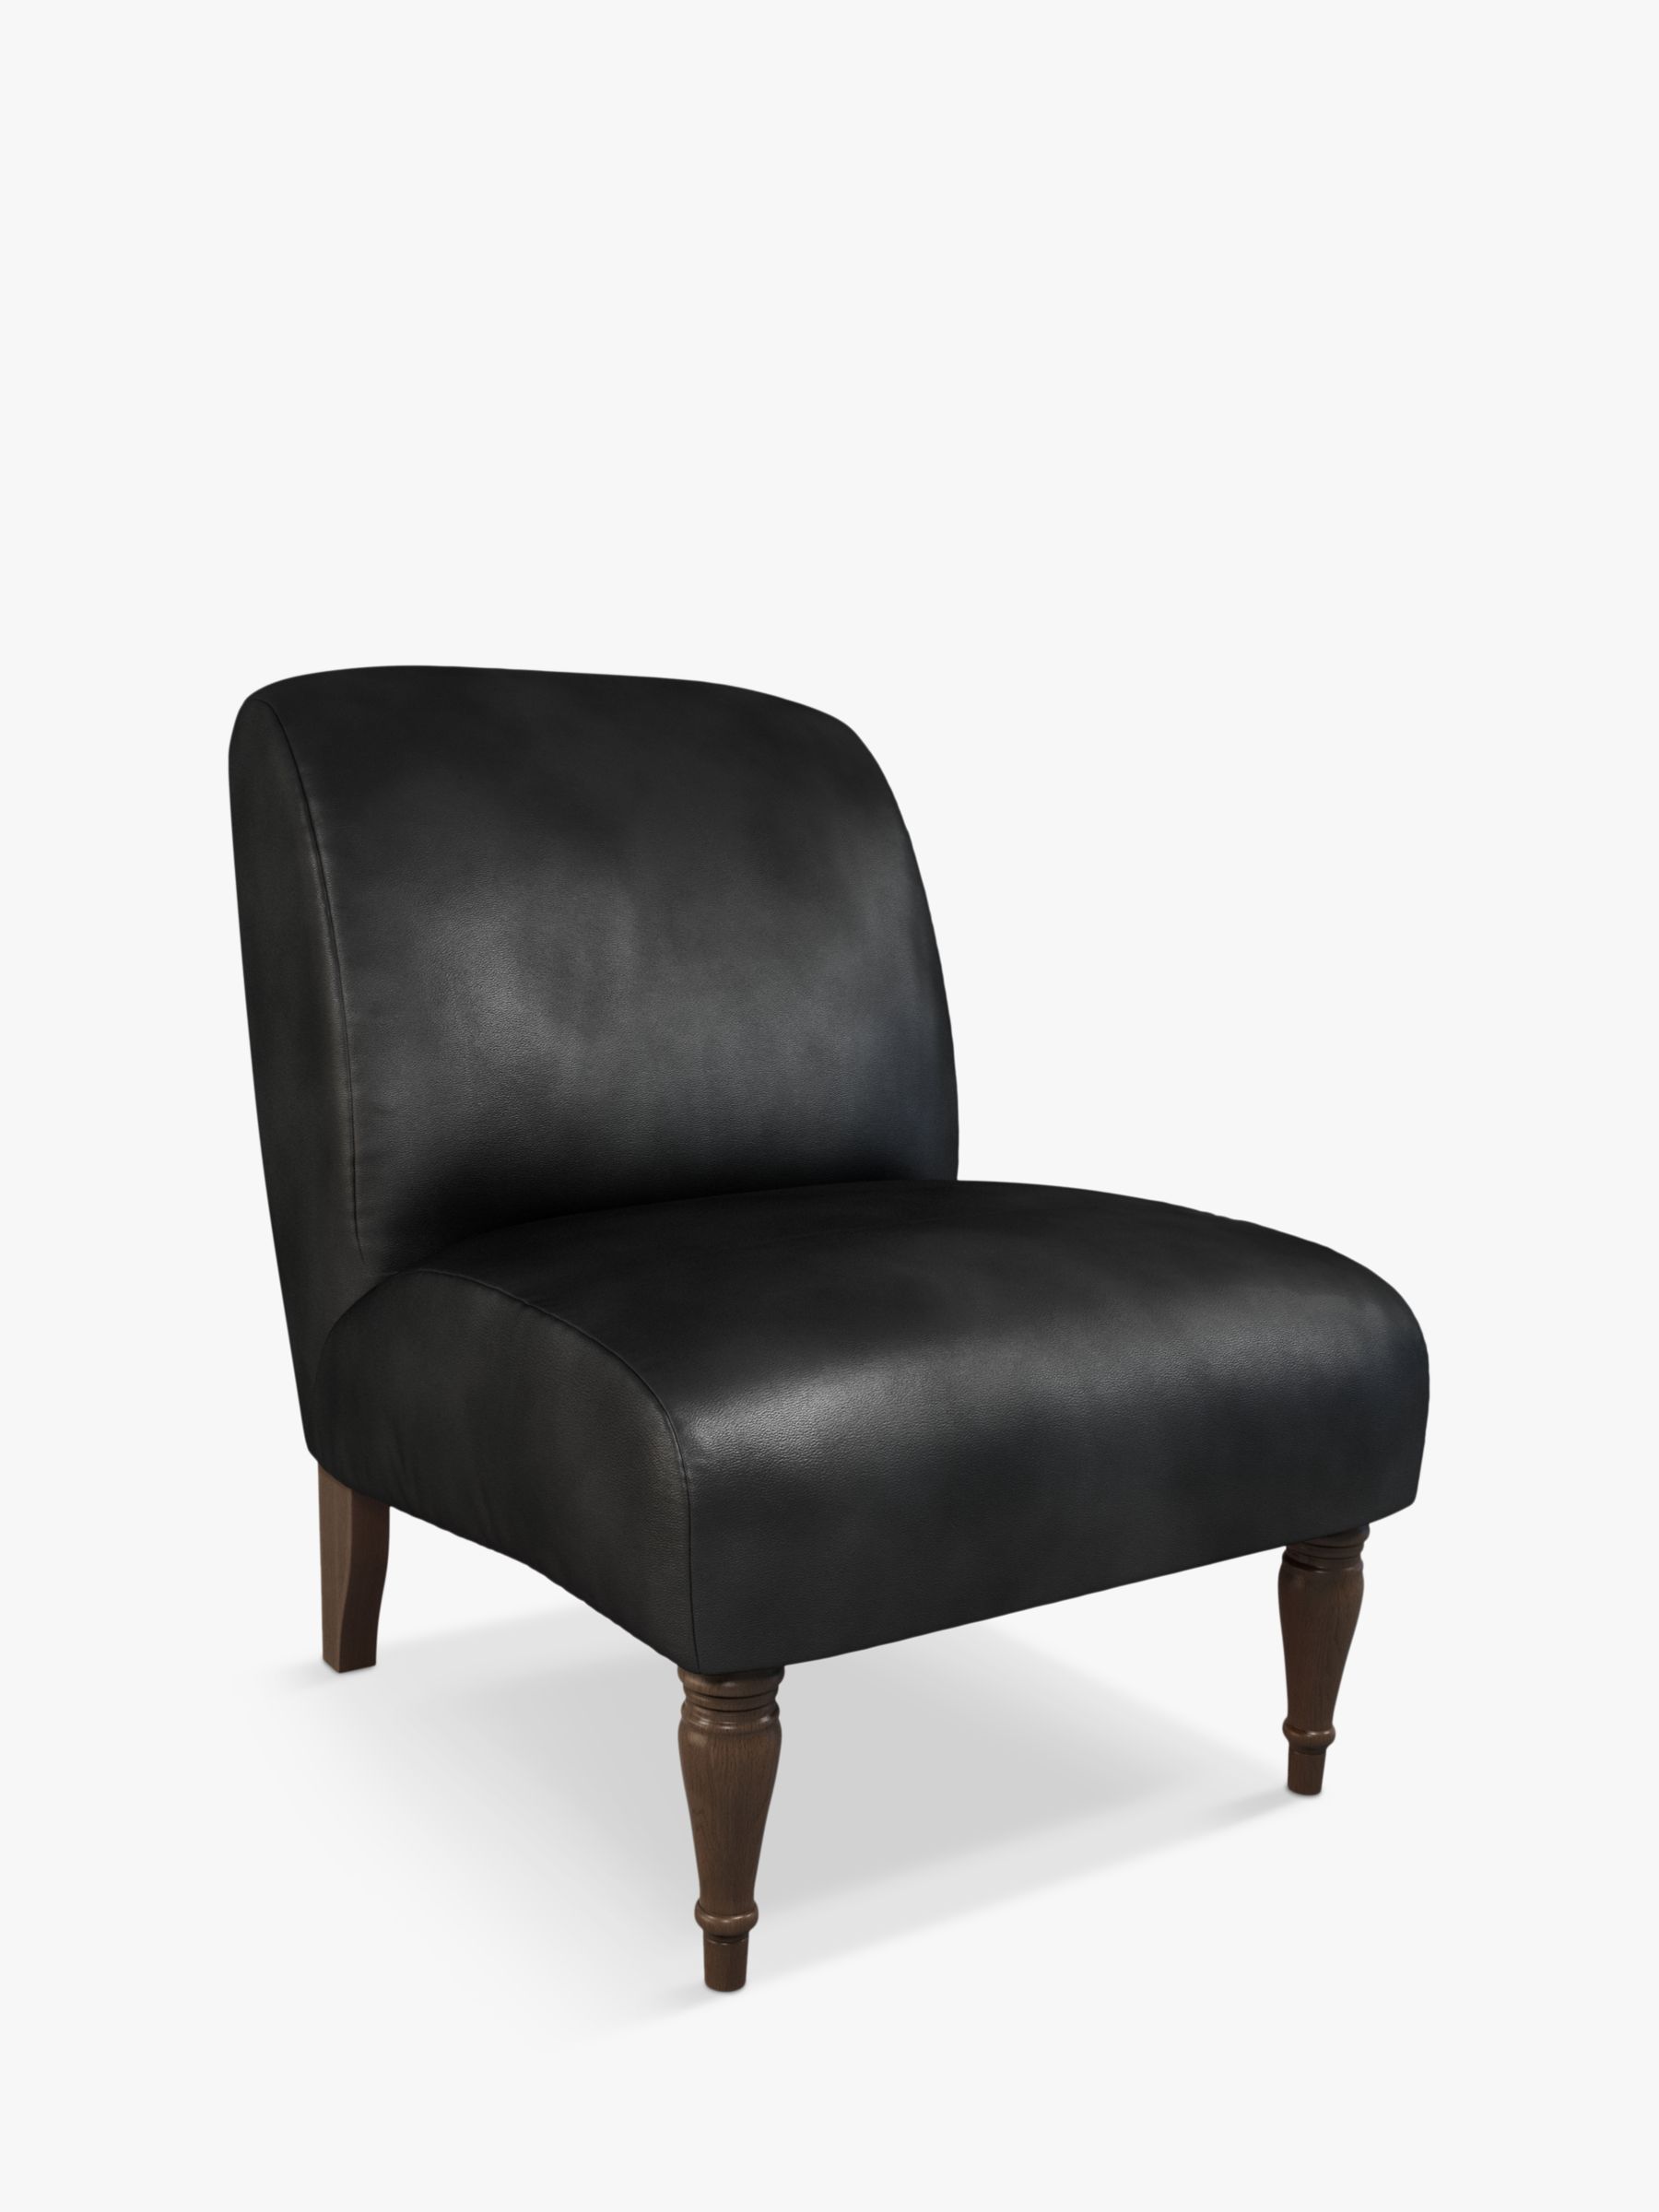 Lounge Range, John Lewis Lounge Leather Chair, Dark Leg, Contempo Black